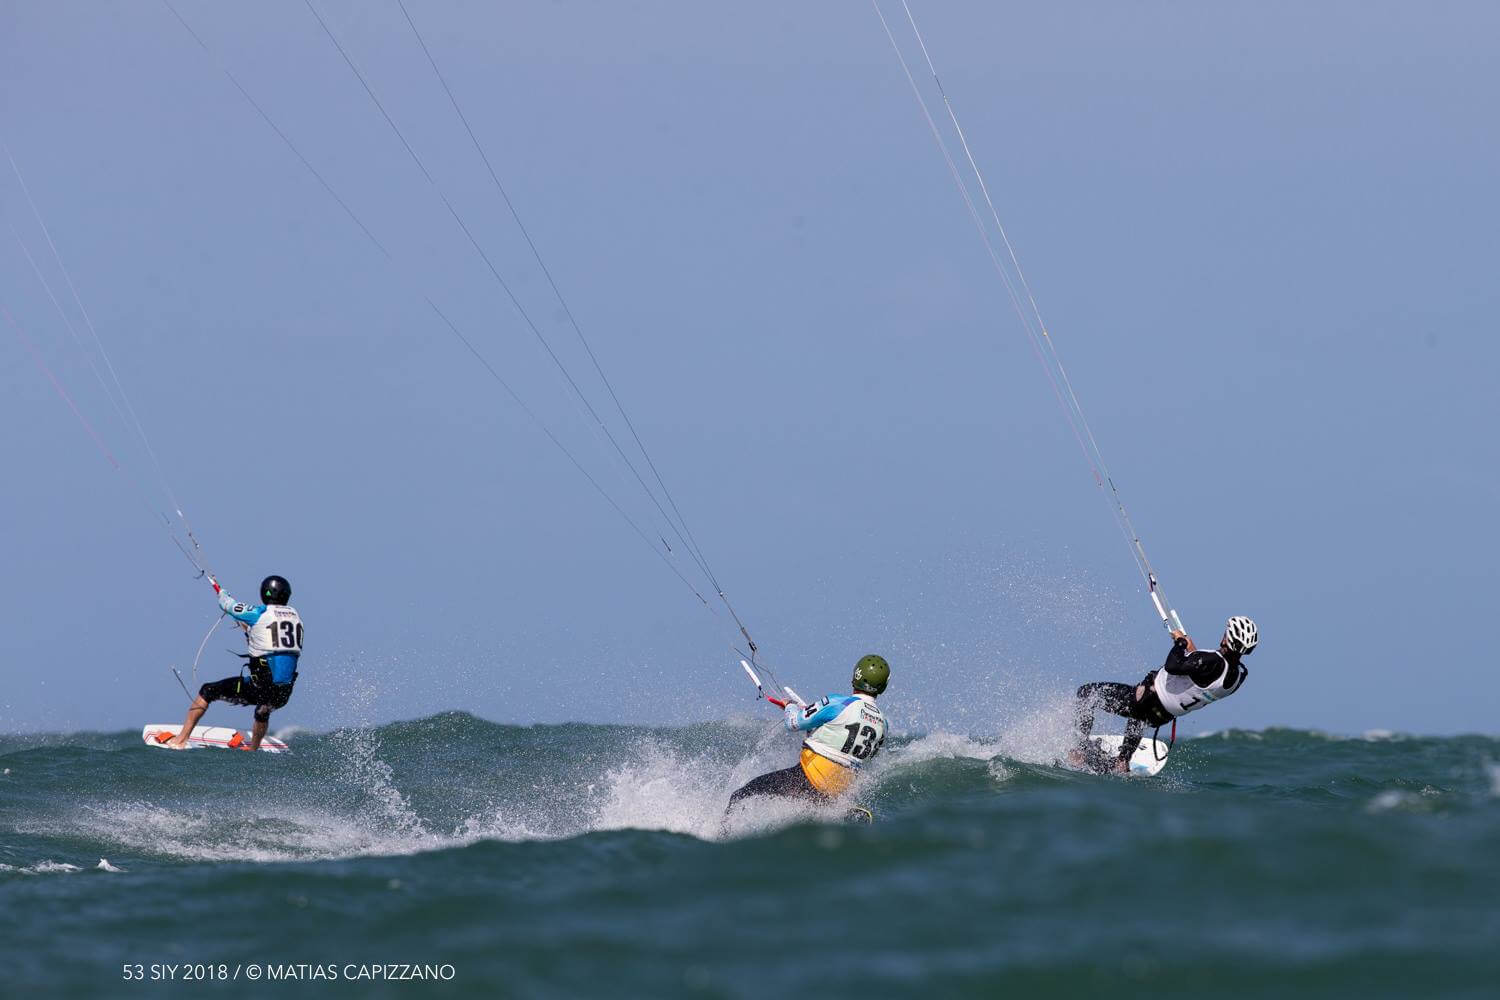 SIY 2018 - Kite Surf - Foto de Matías Capizzano